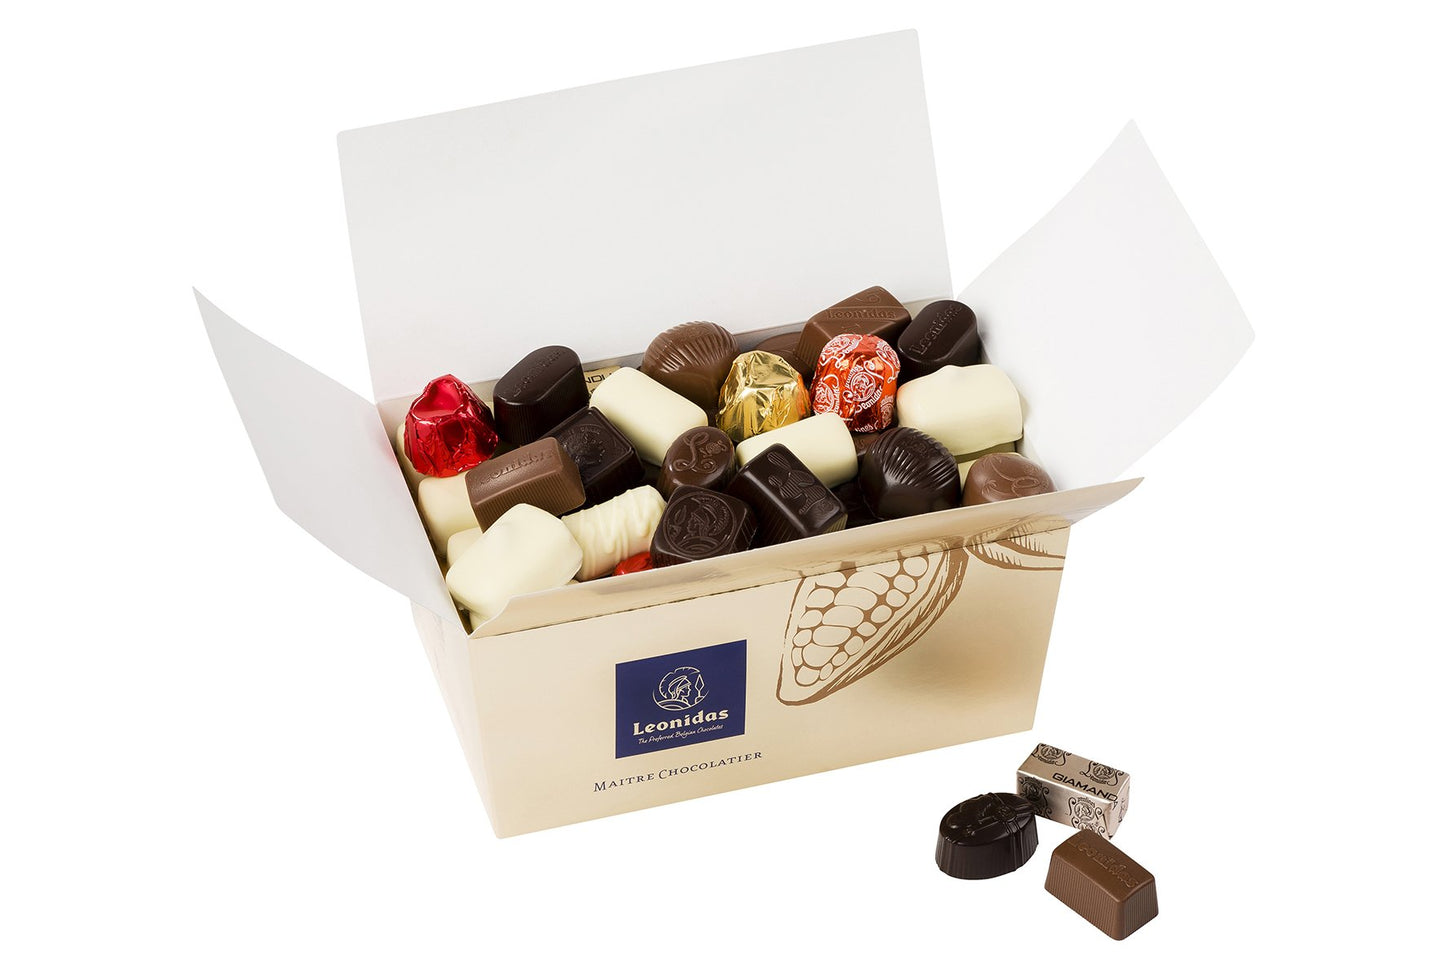 Leonidas Small Dark Chocolate Assortment Heritage Gift Box